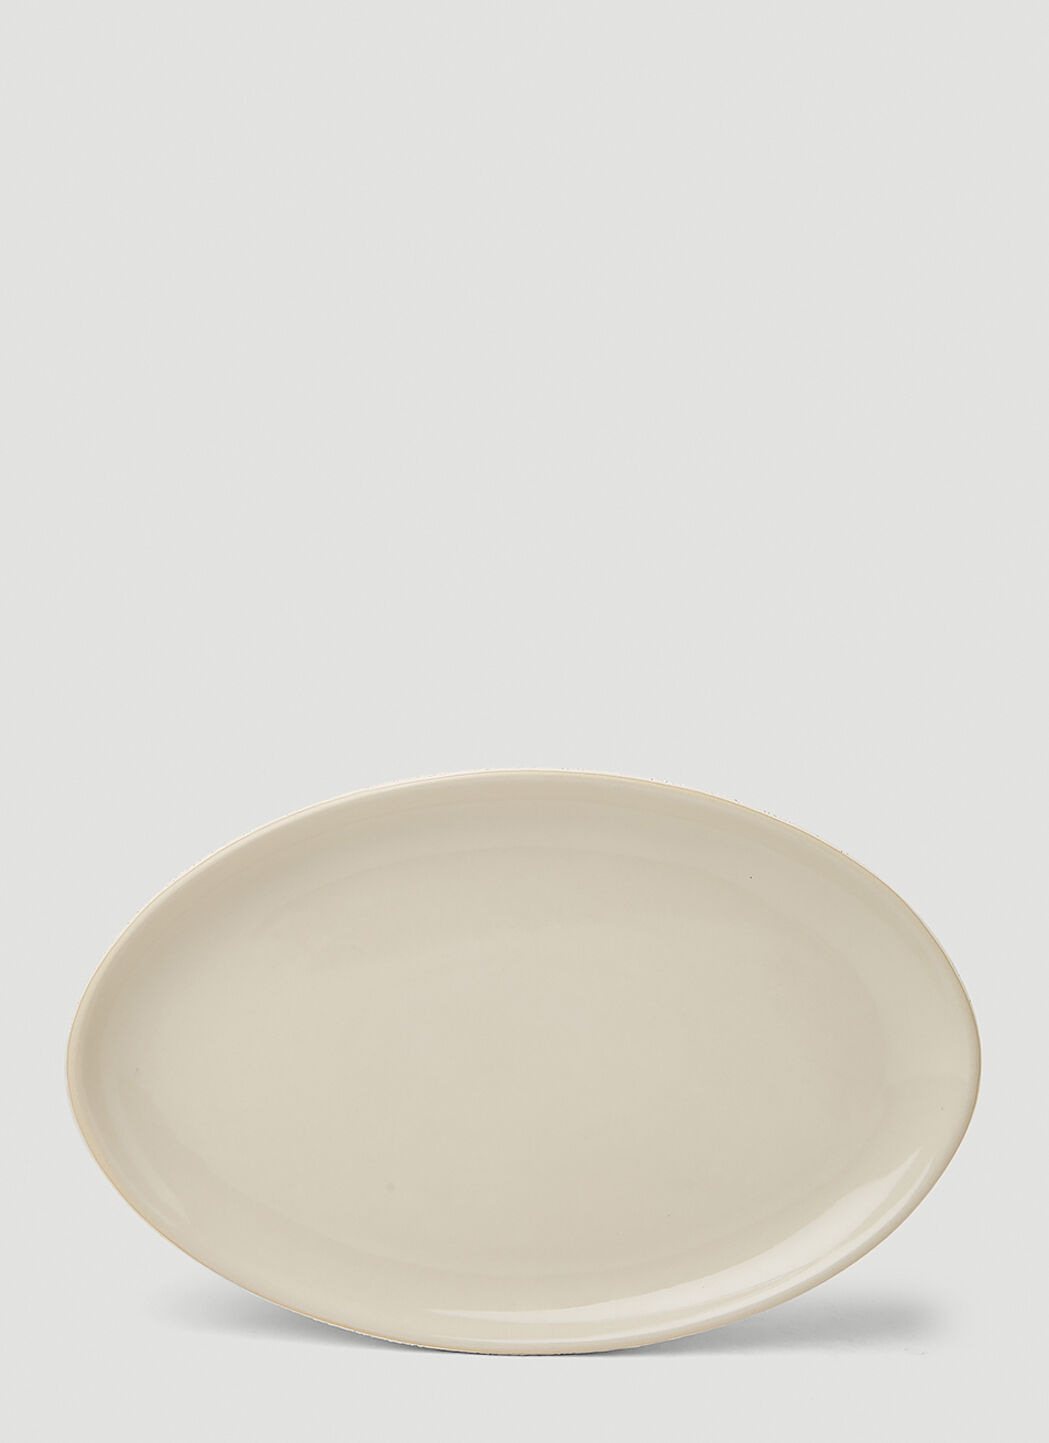 Marloe Marloe Set of Two Oval Dinner Plates Brown rlo0353003